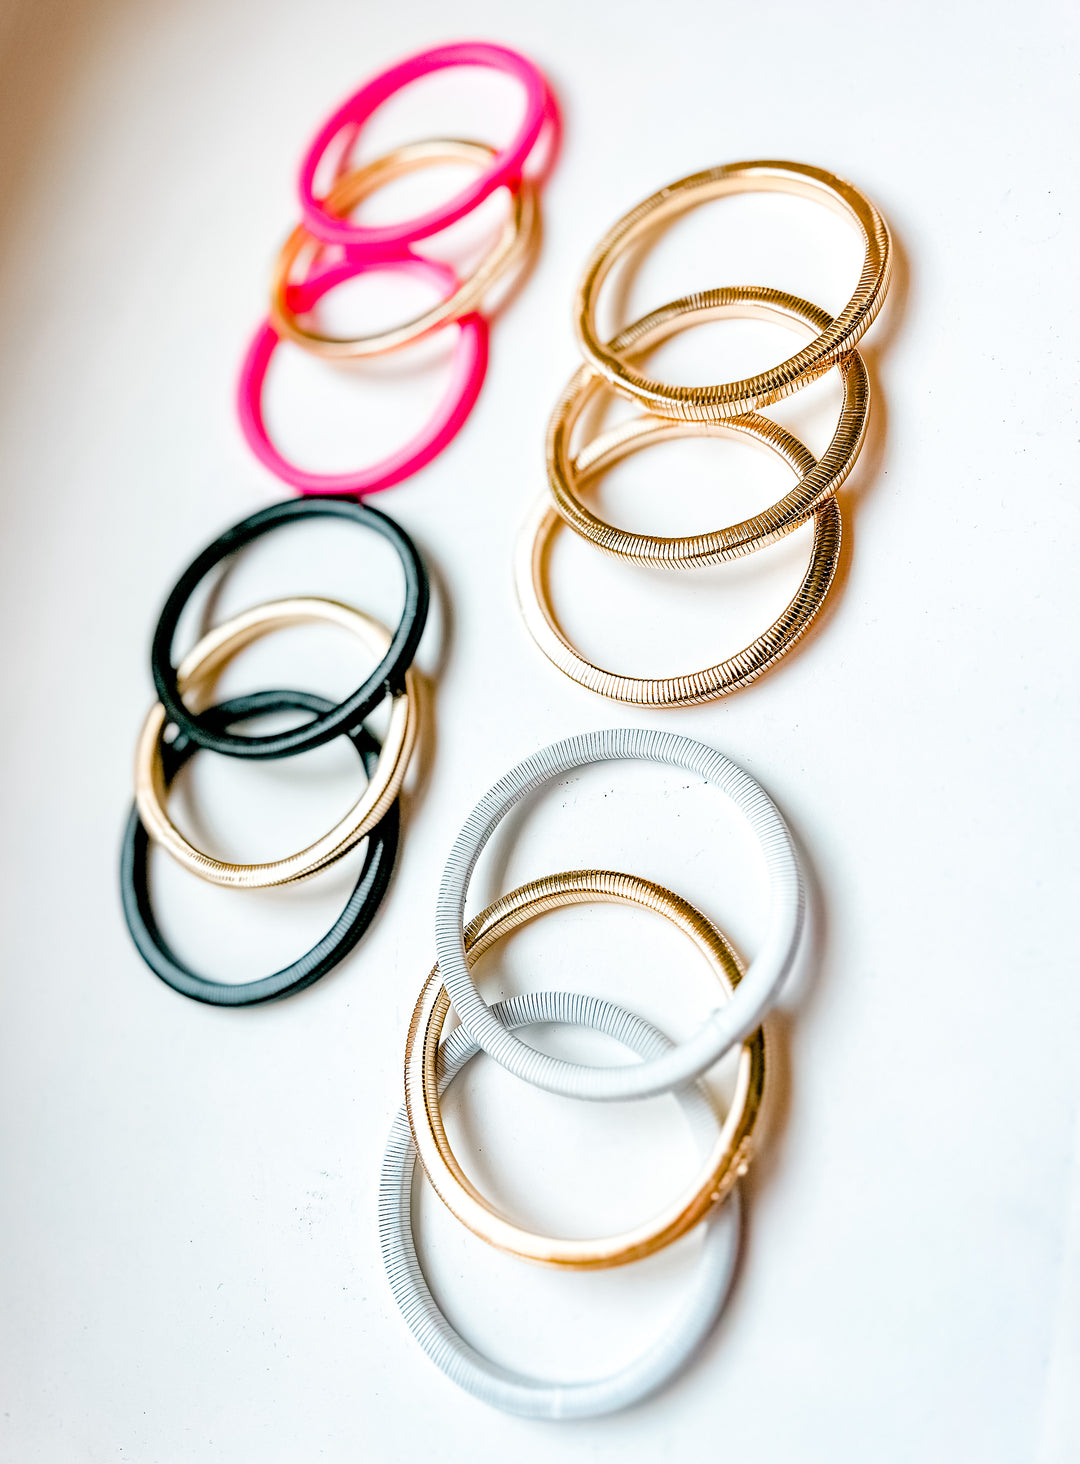 The Wired Stretch Bracelets